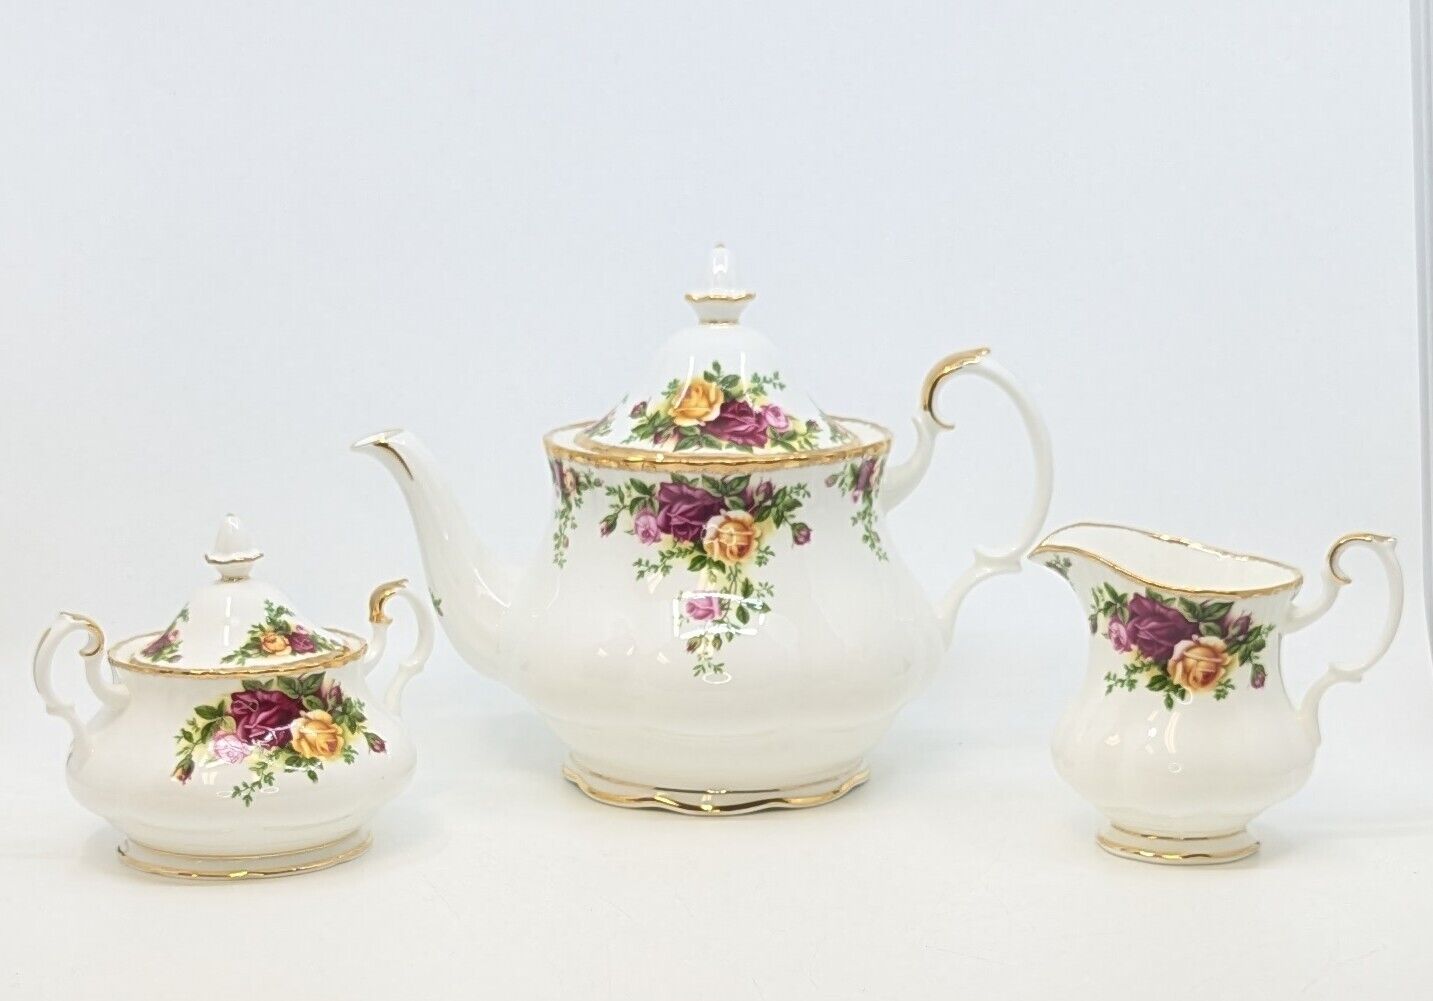 Vintage Royal Albert Old Country Roses Teapot, Creamer and Sugar Bowl Set